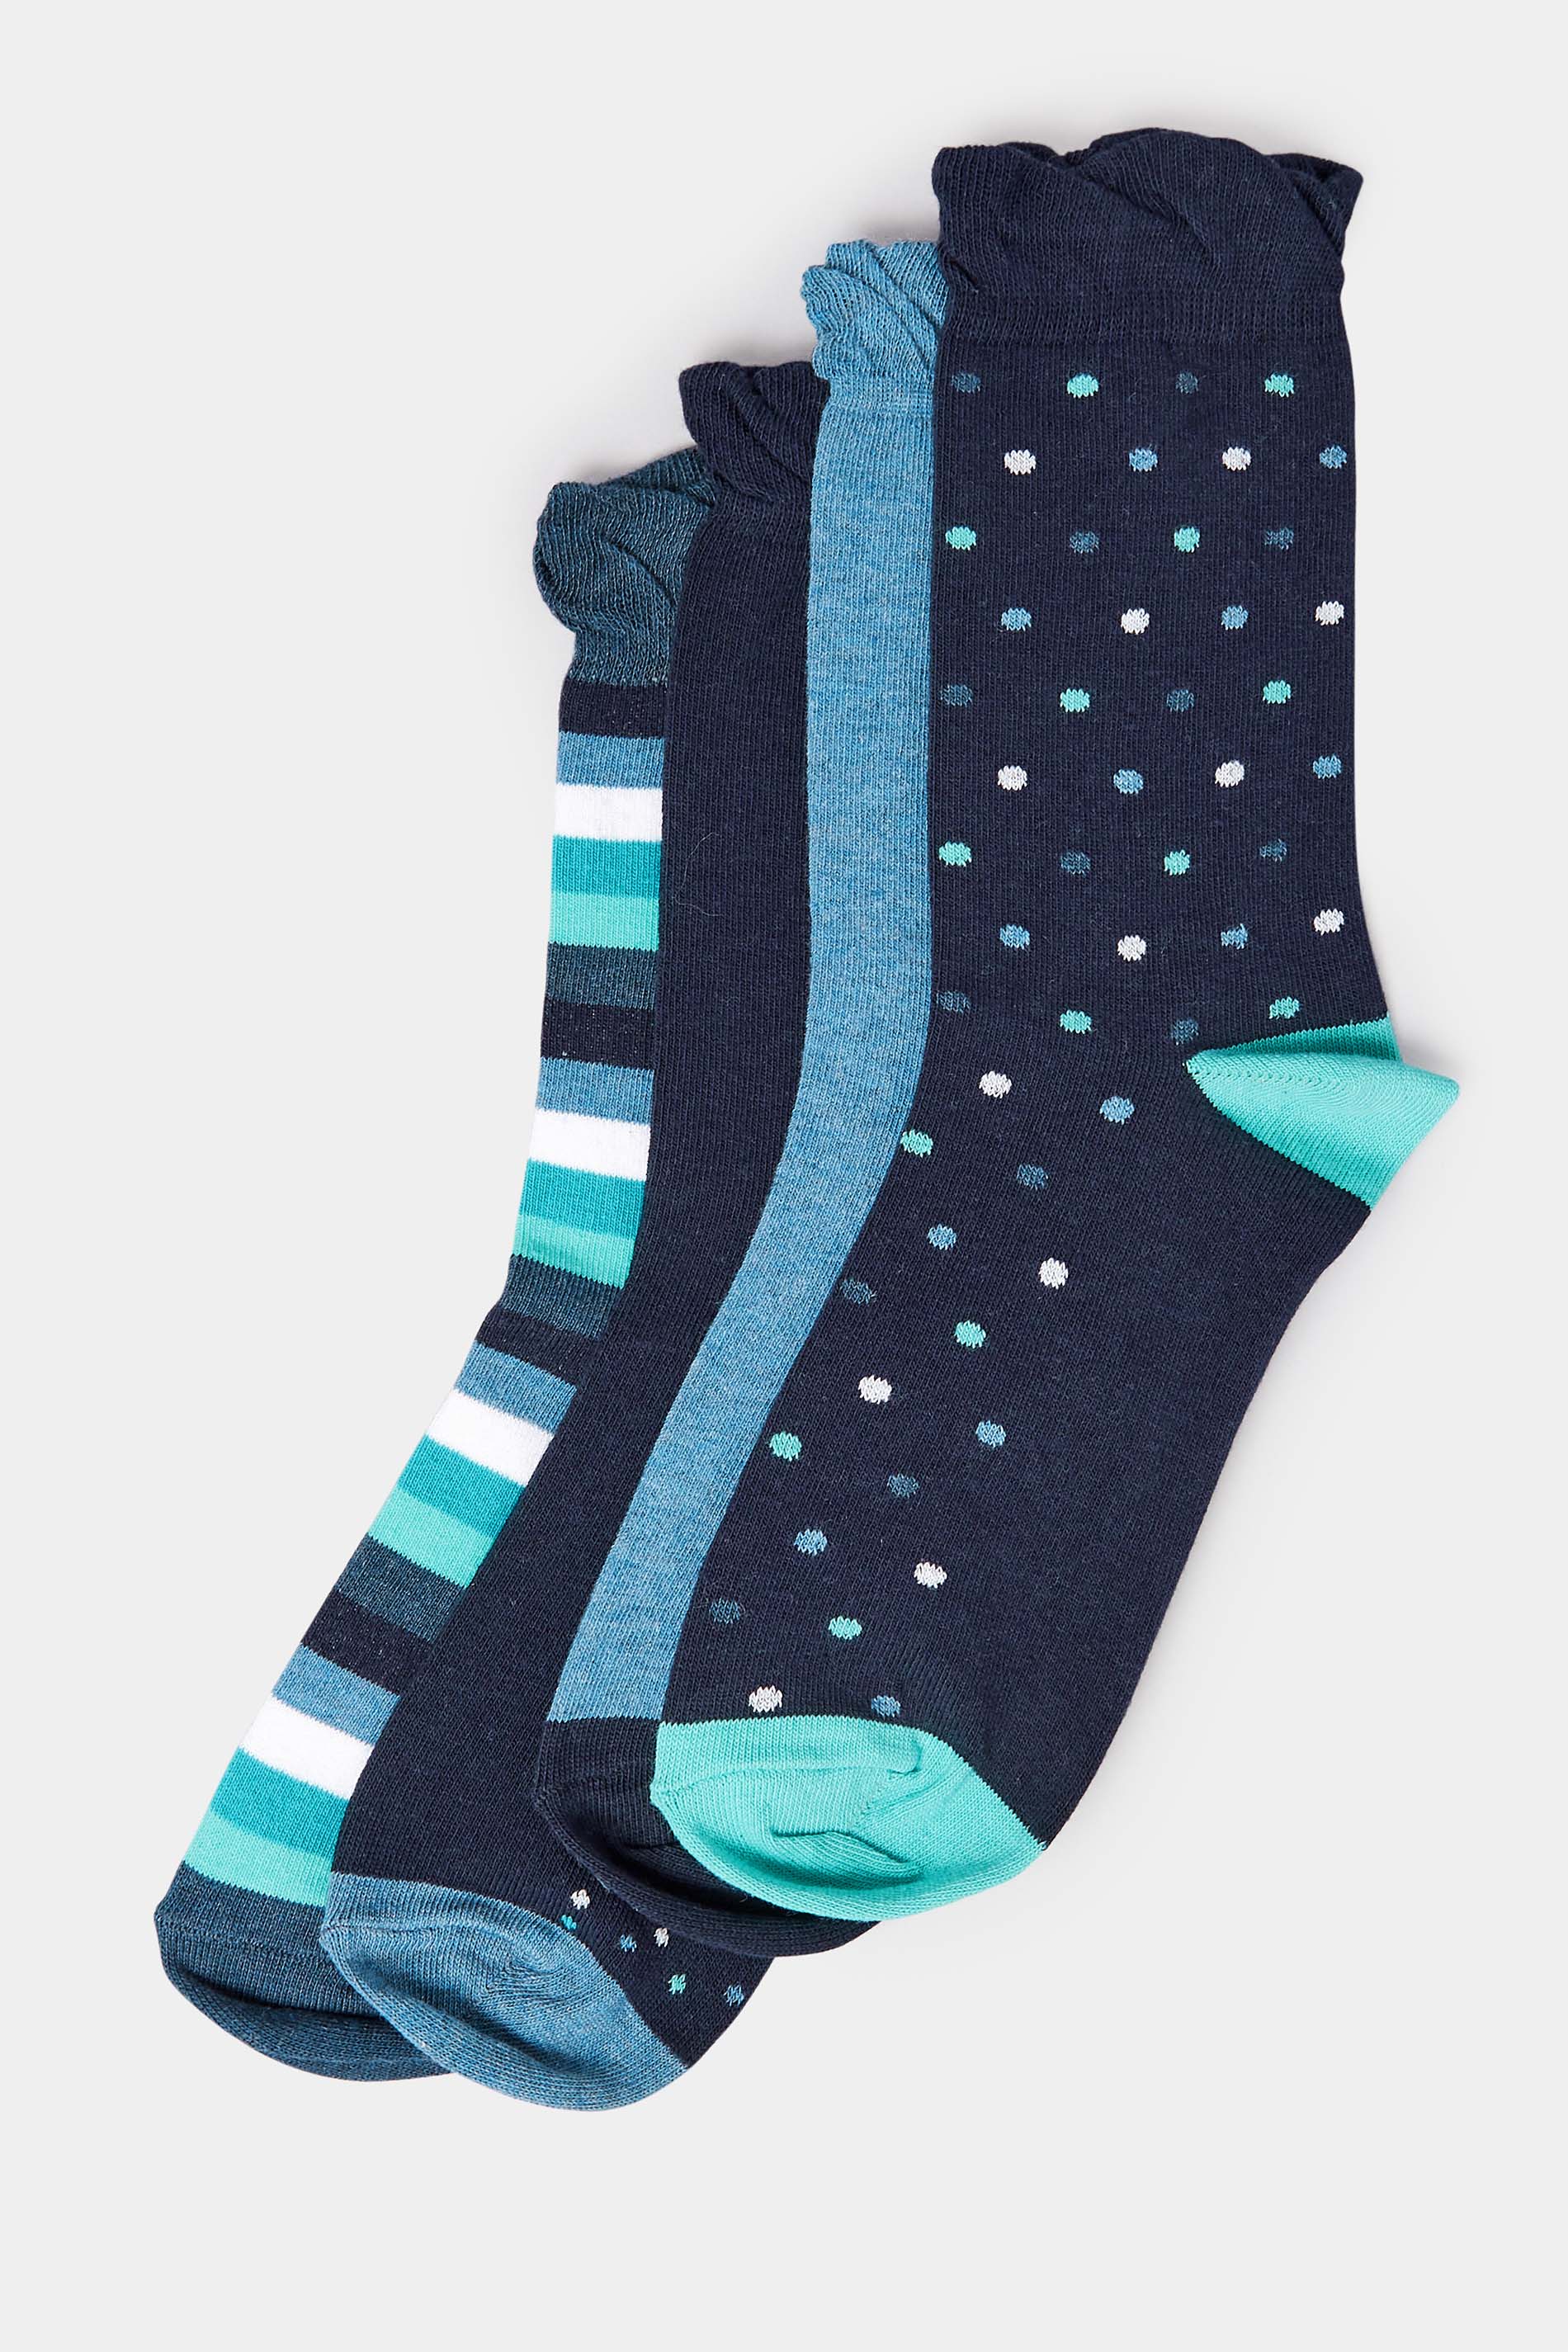 4 PACK Navy Blue Spot Print Socks | Yours Clothing  3